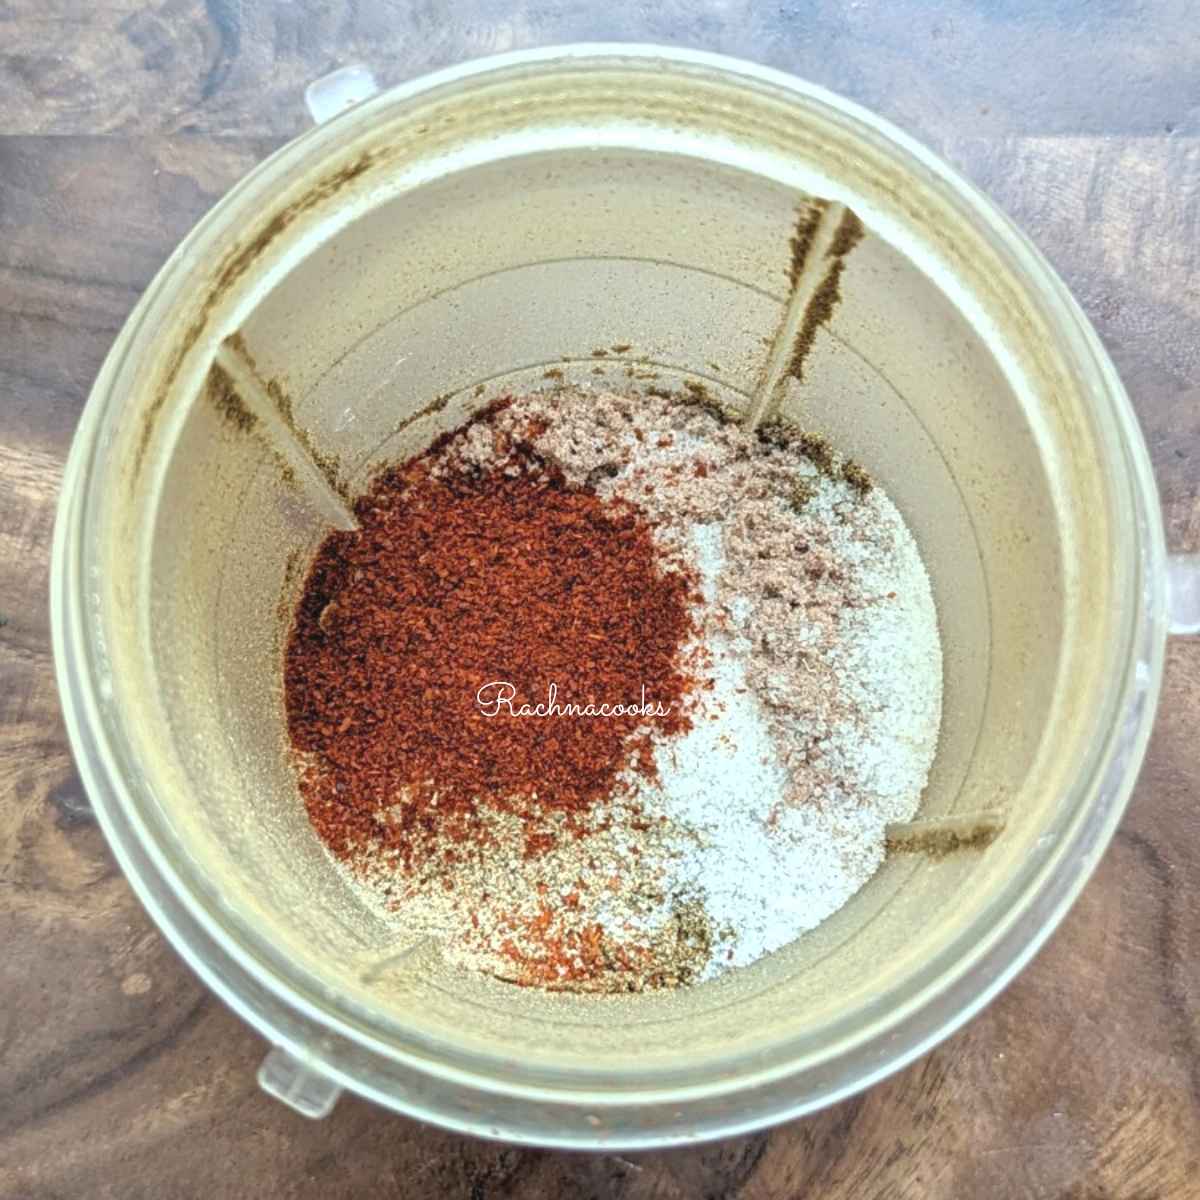 salt, black salt. amchur powder, hing and chilli powder (optional) added to the powdered spices in the blender.